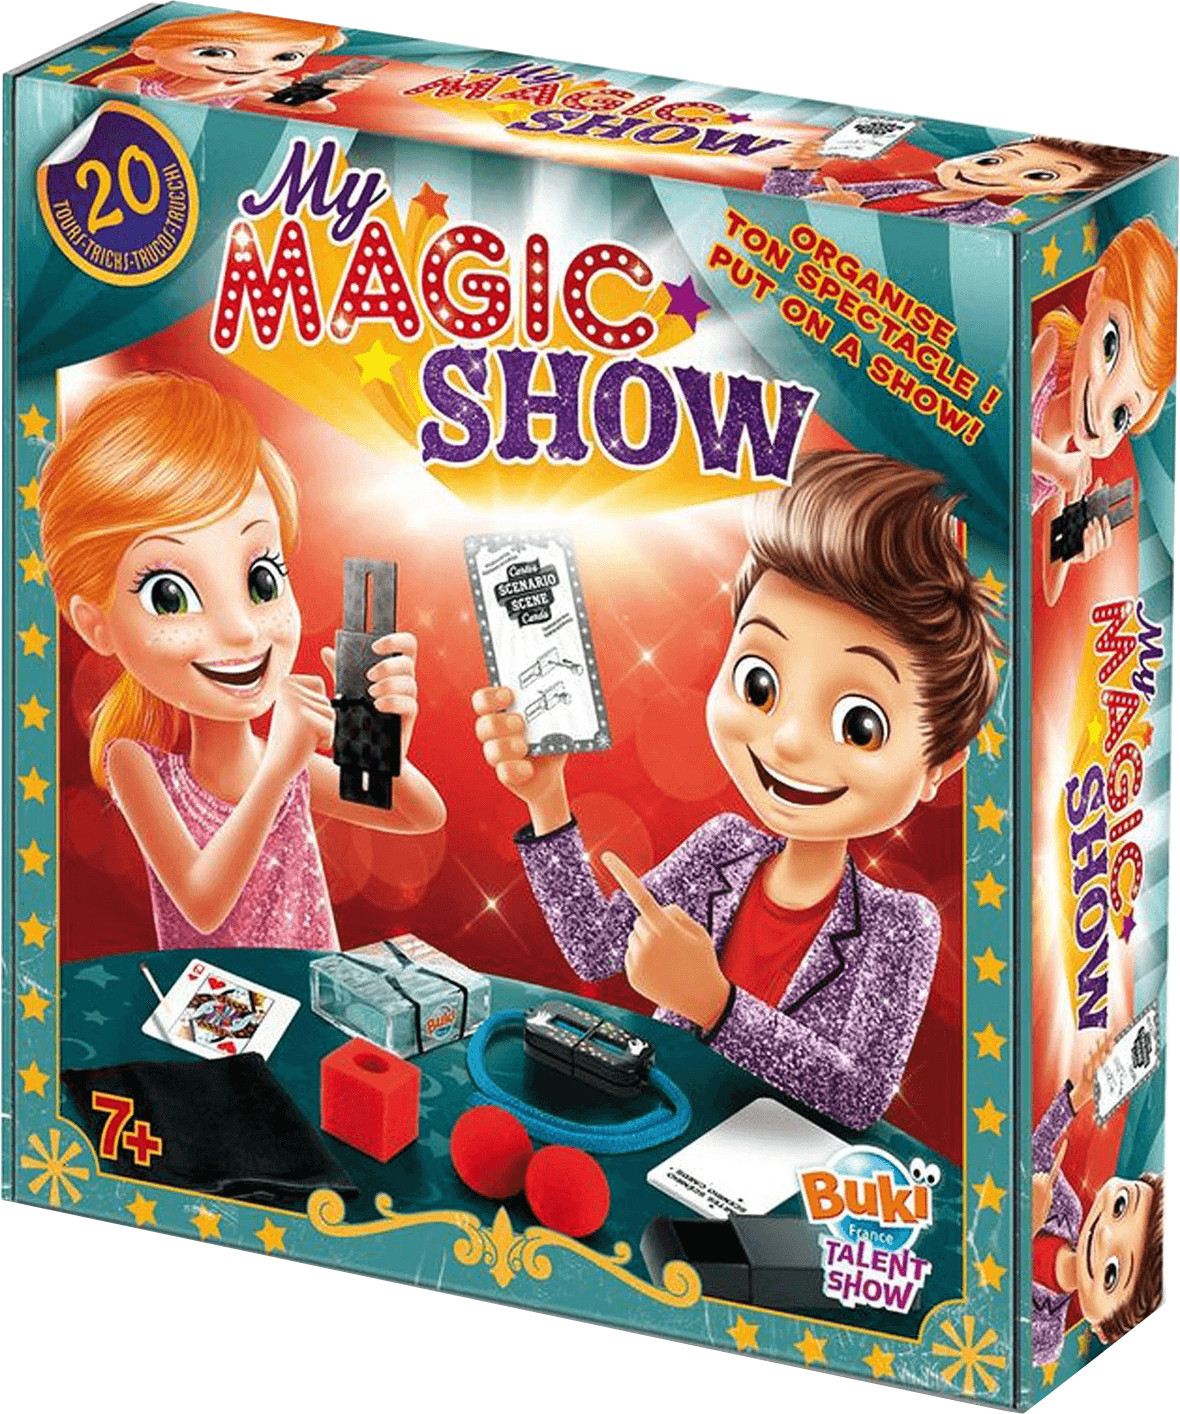 My magic show coffret de magie - Buki